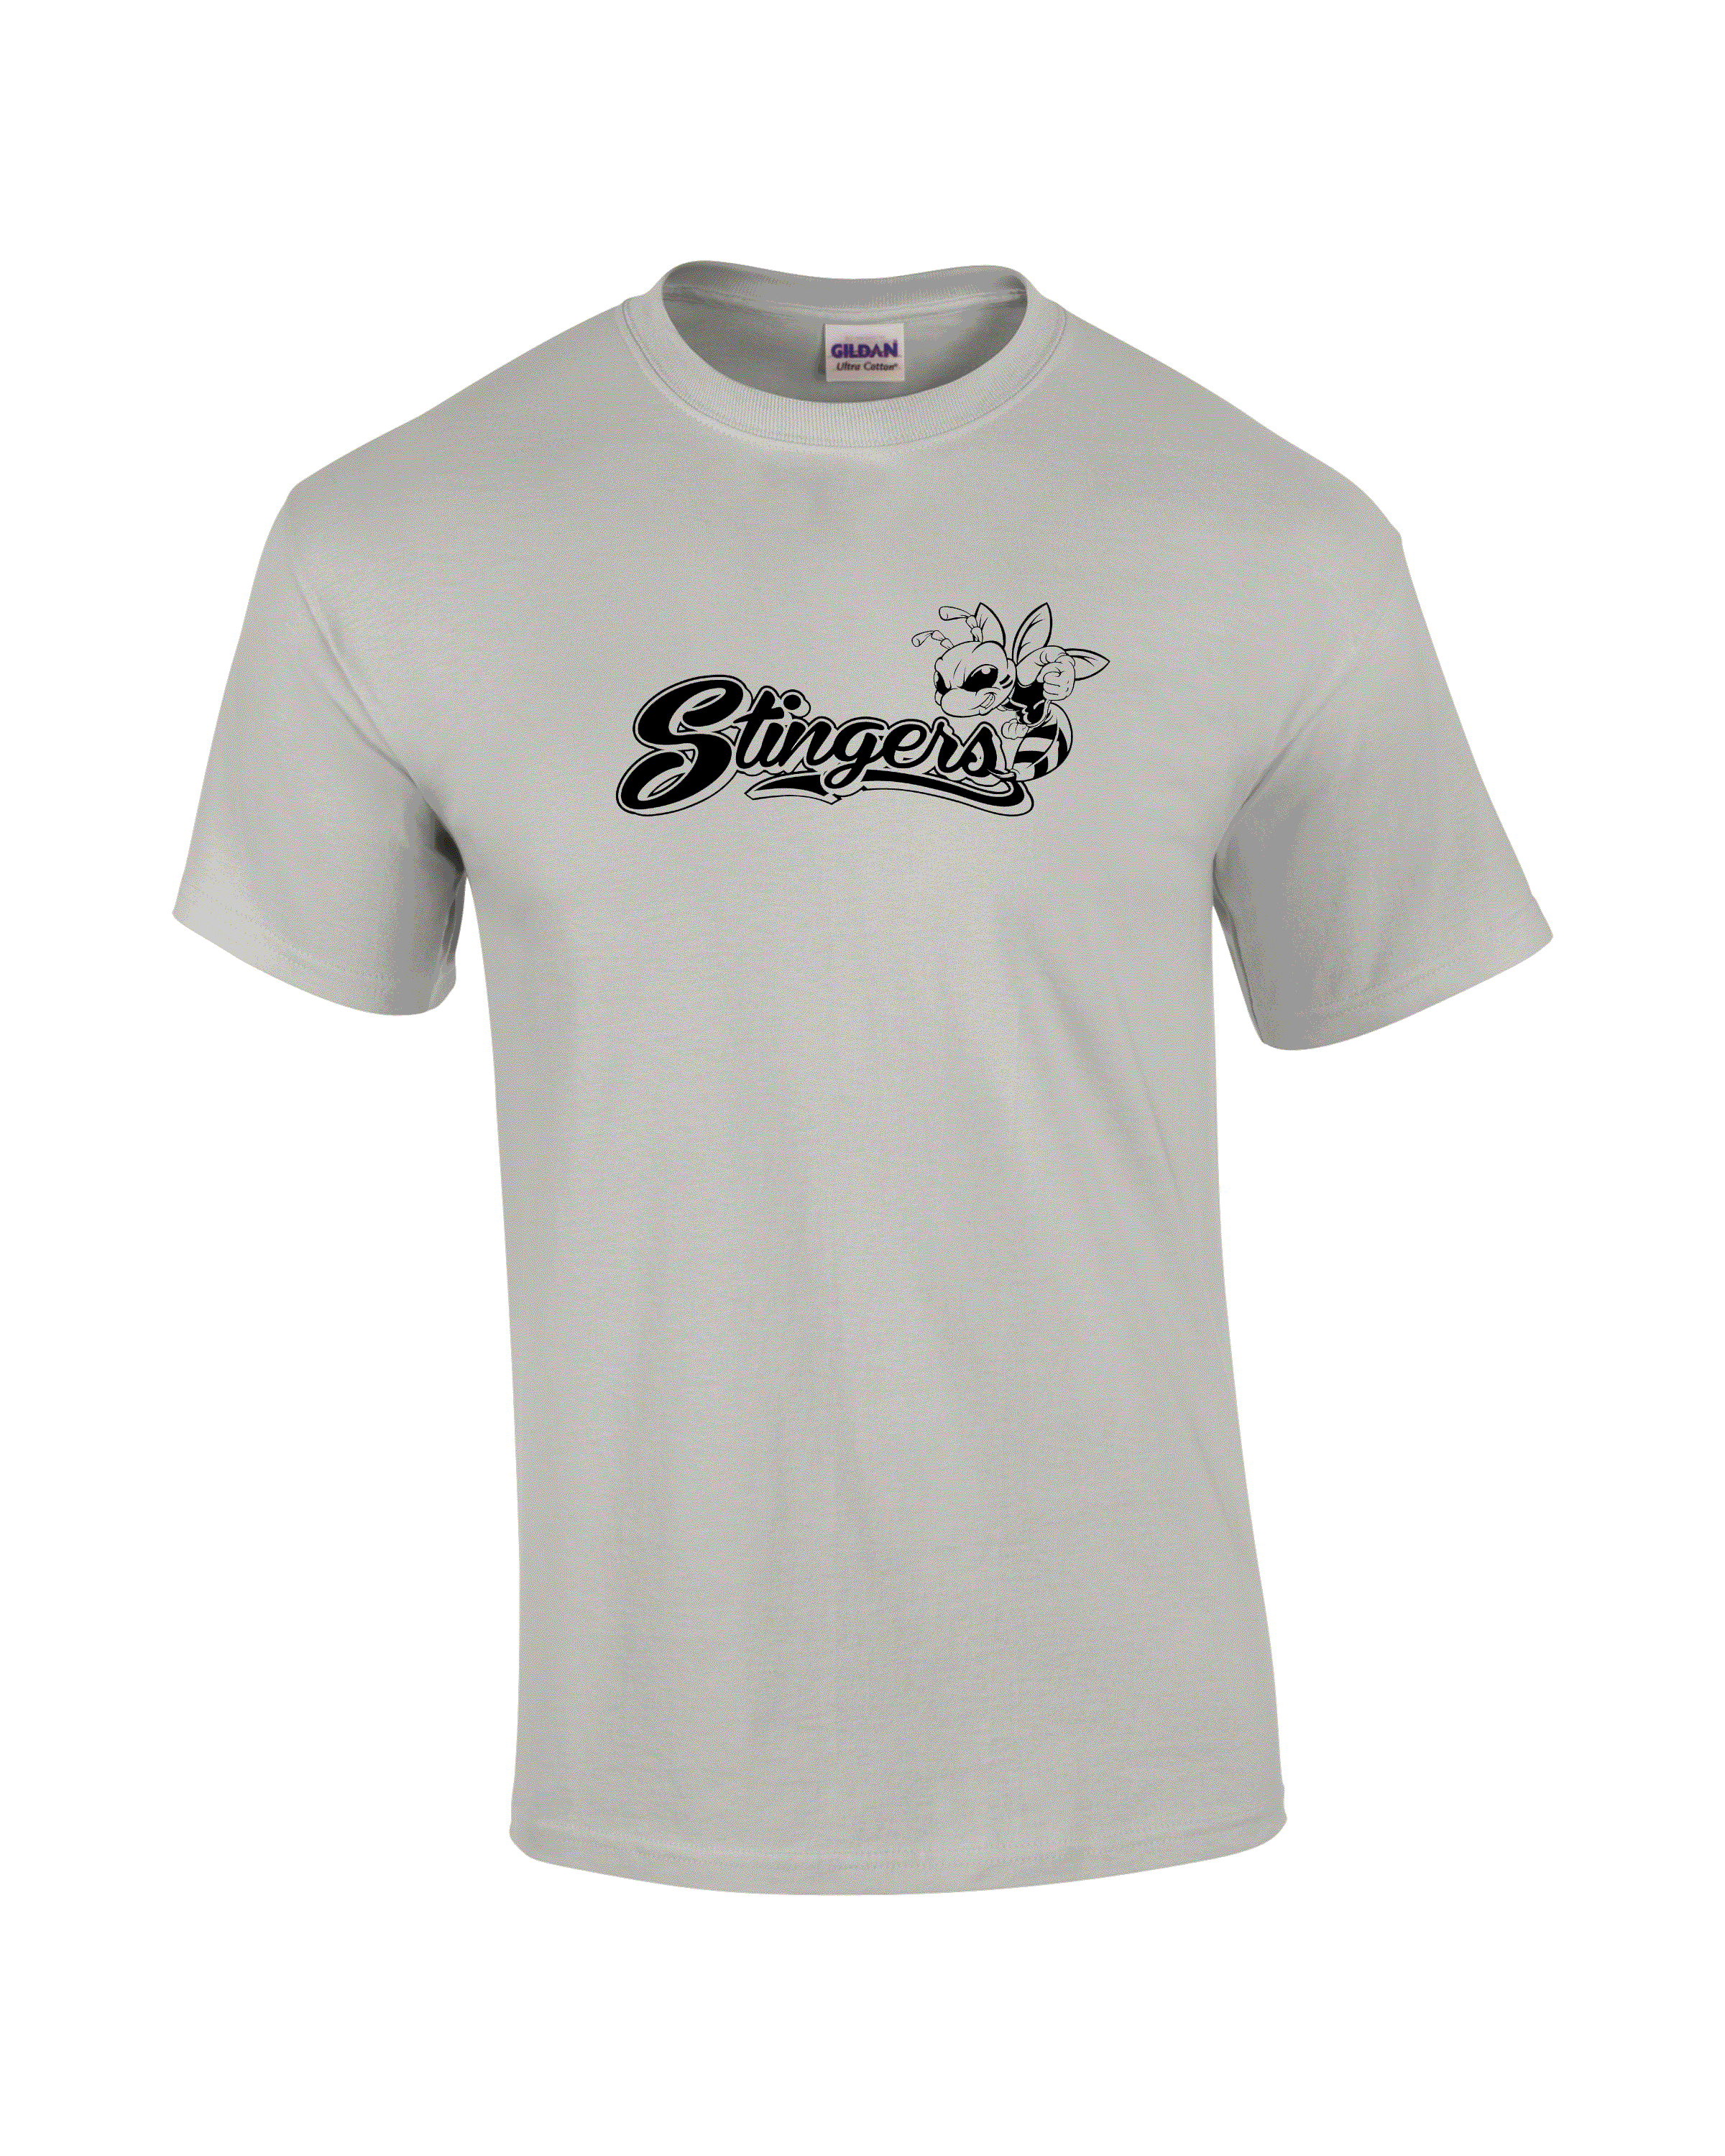 Stingers T-Shirt - Team Shirt Pros